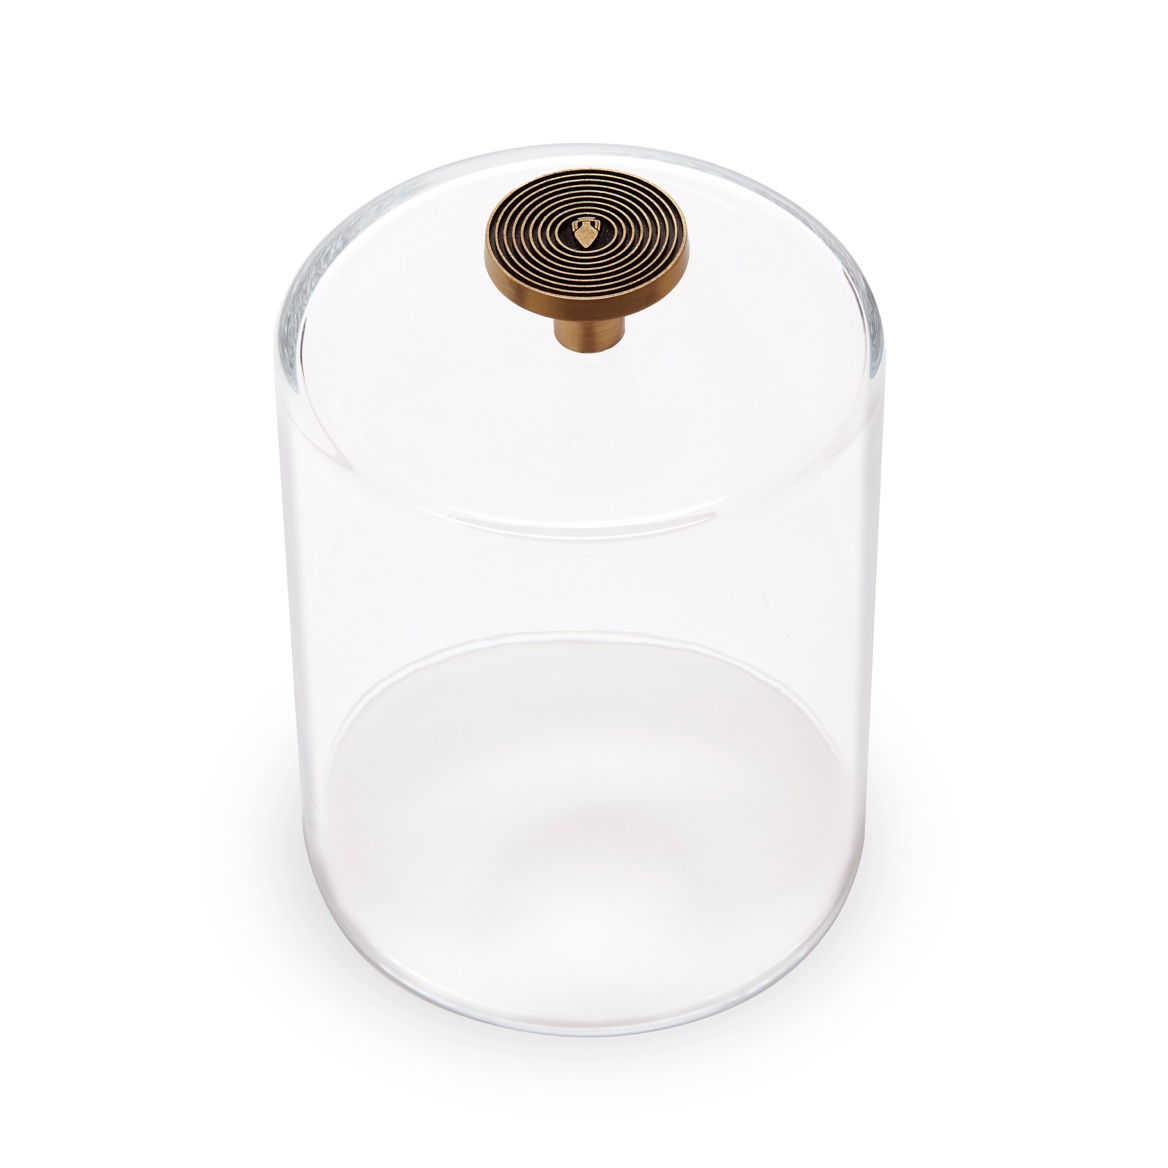 Glass cloche with metal knob